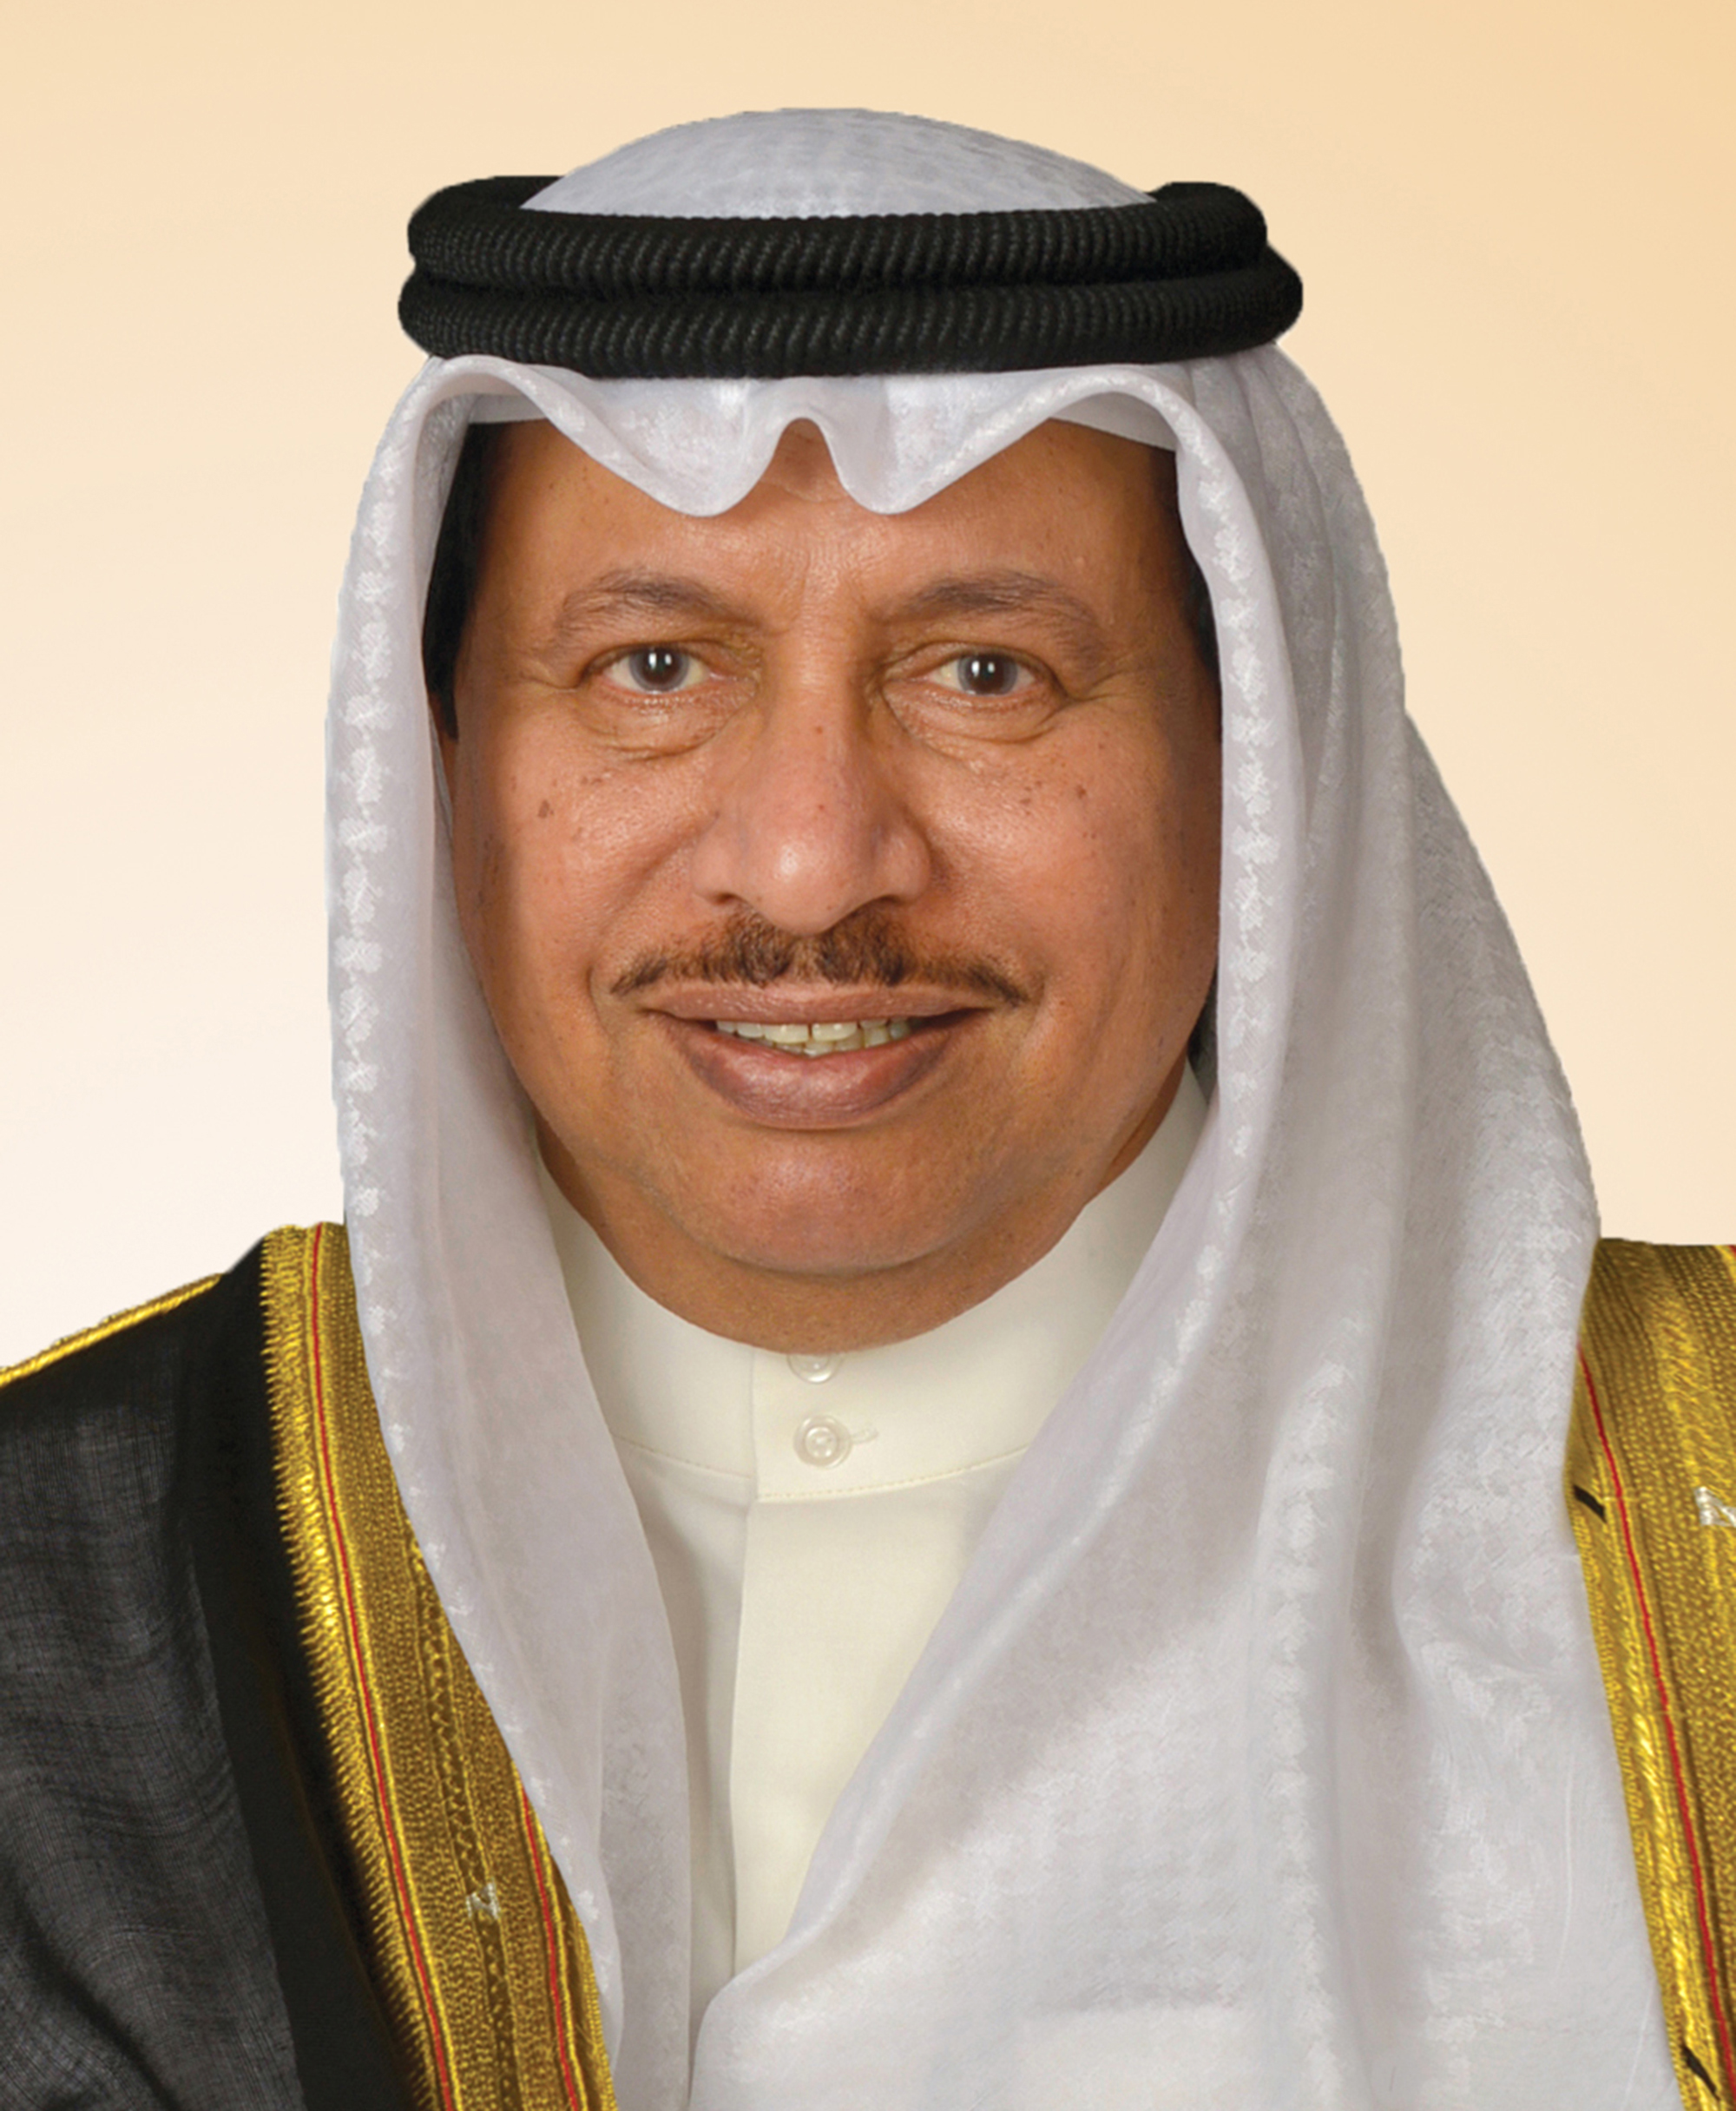 His Highness Sheikh Jaber Al-Mubarak